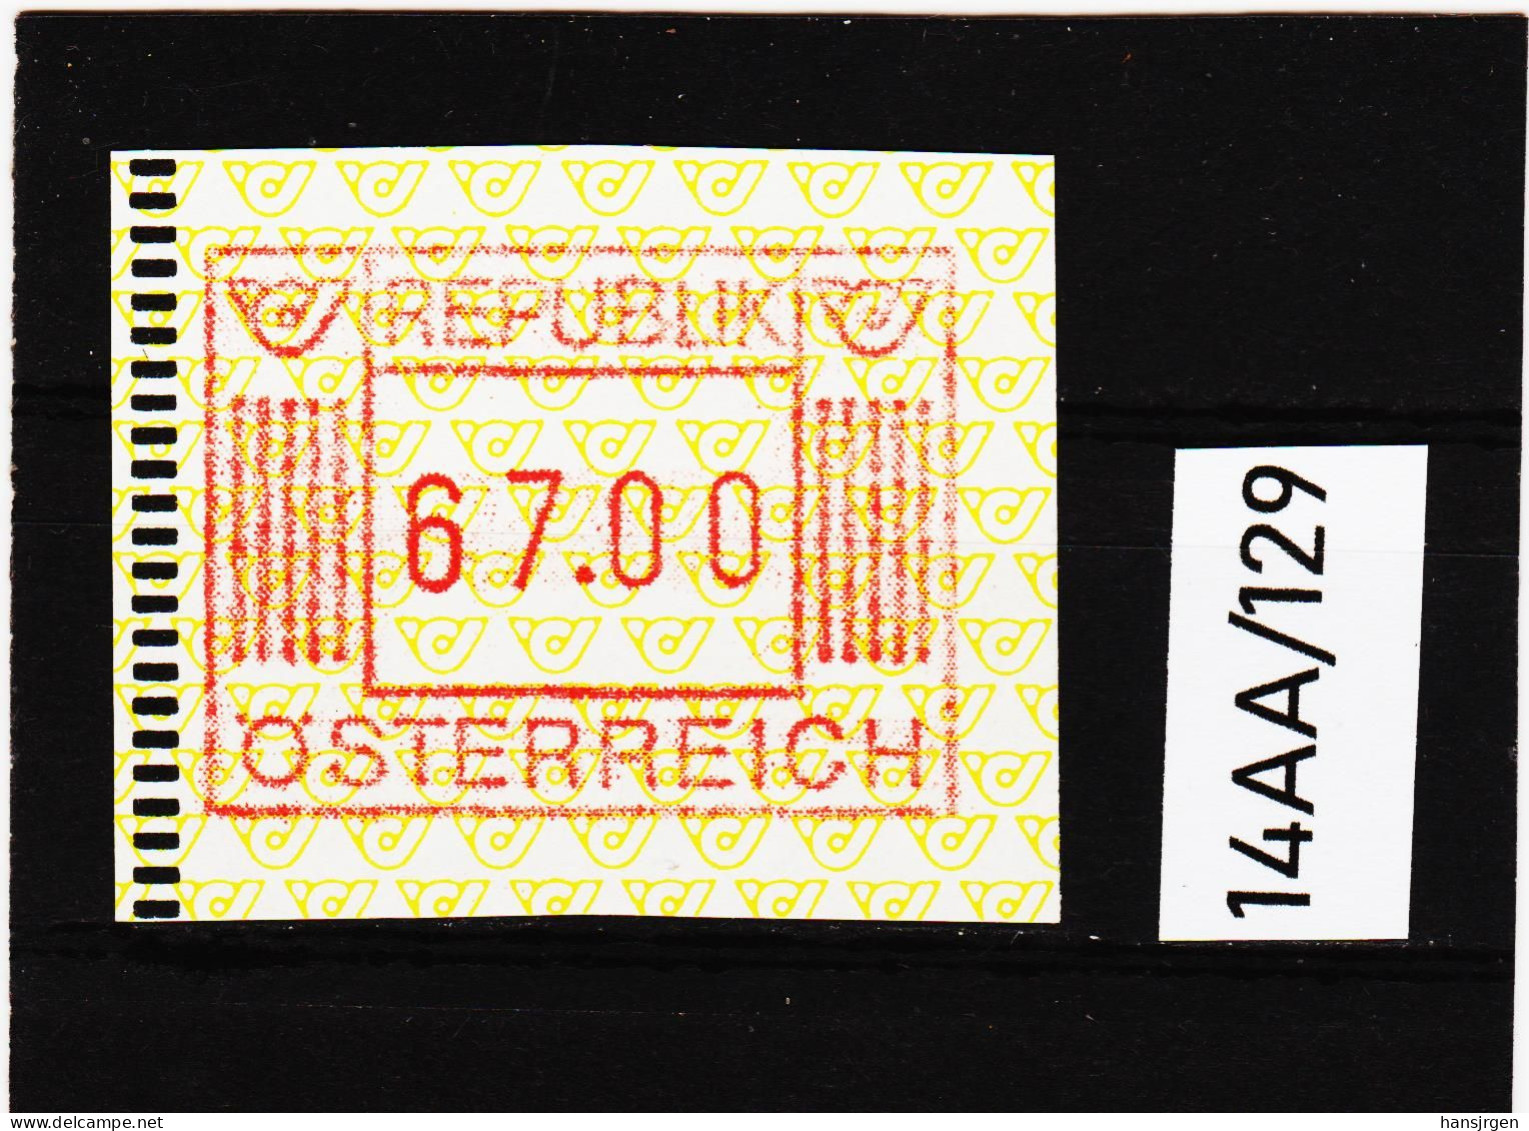 14AA/129  ÖSTERREICH 1983 AUTOMATENMARKEN  A N K  1. AUSGABE  67,00 SCHILLING   ** Postfrisch - Timbres De Distributeurs [ATM]